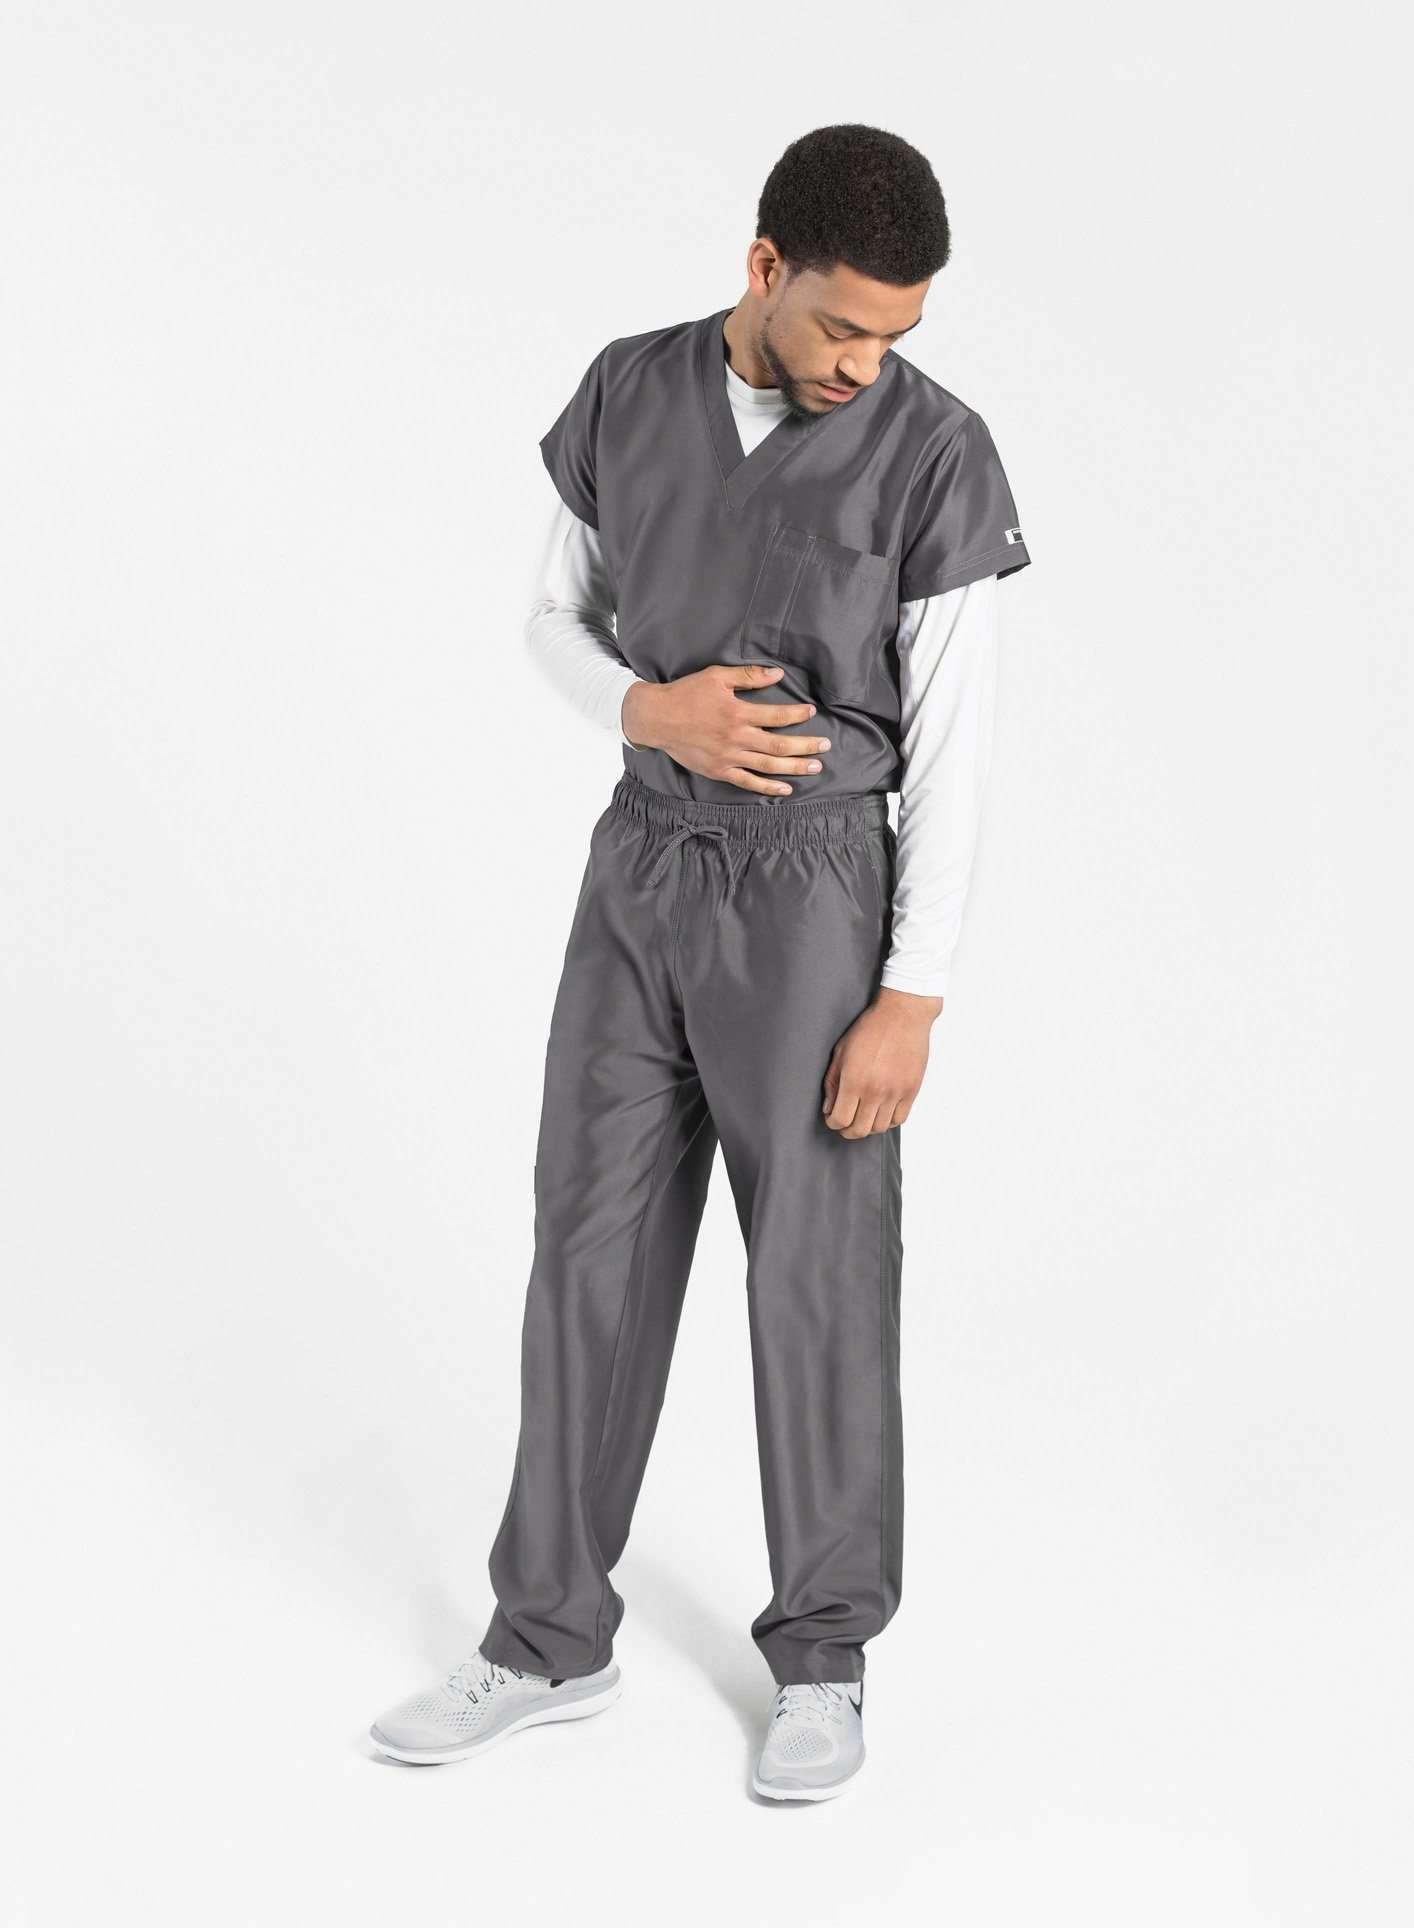 Underscrubs  The Best Scrub Undershirts for Medical Professionals – Tagged  Men – TiScrubs